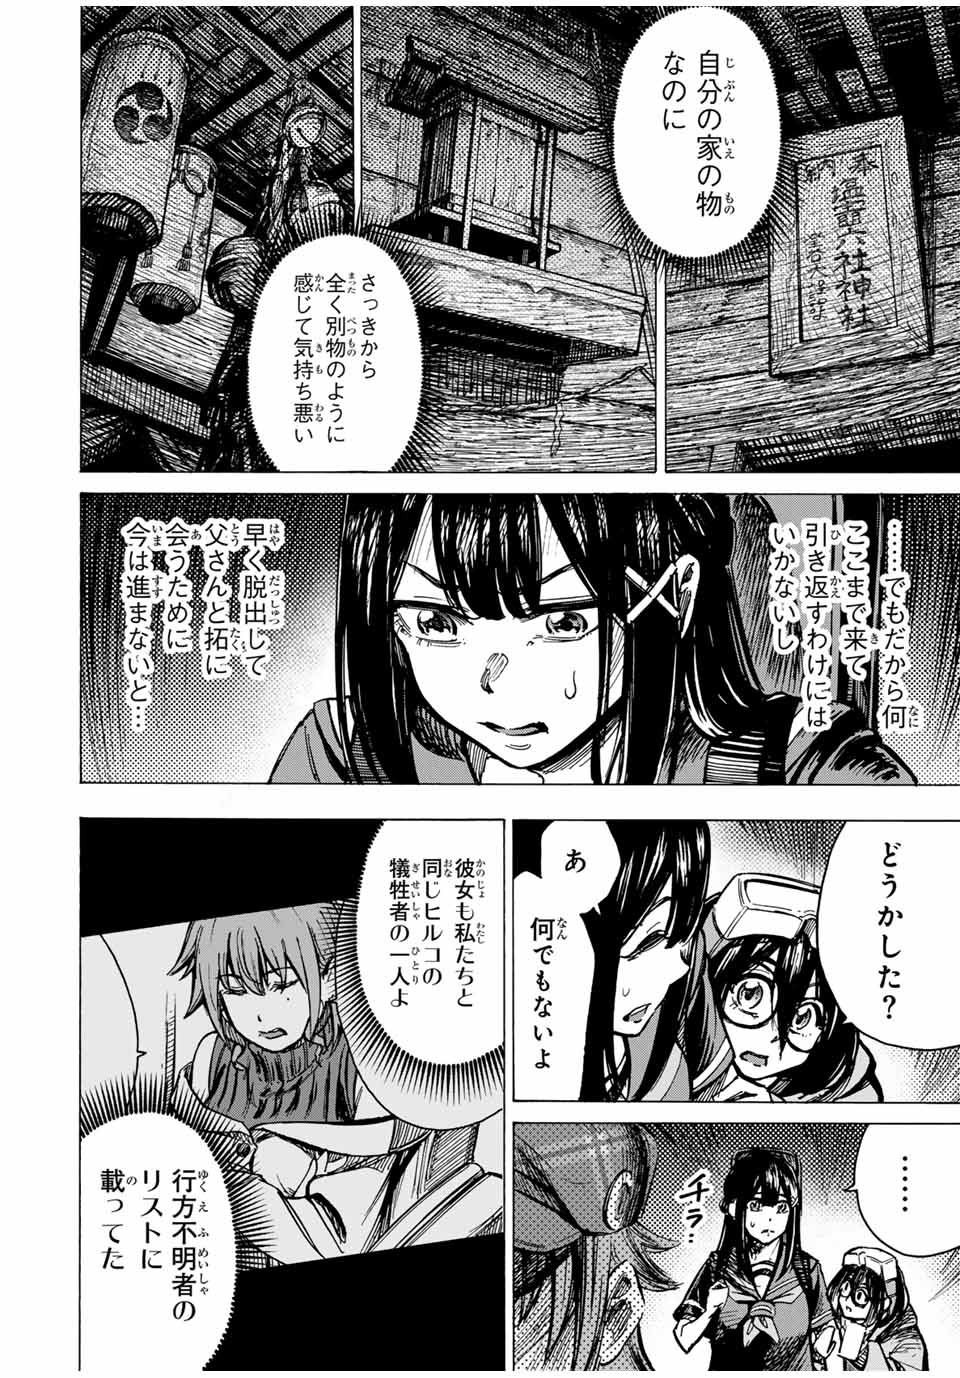 Kaminagashijima – Rinne no Miko - Chapter 26 - Page 2